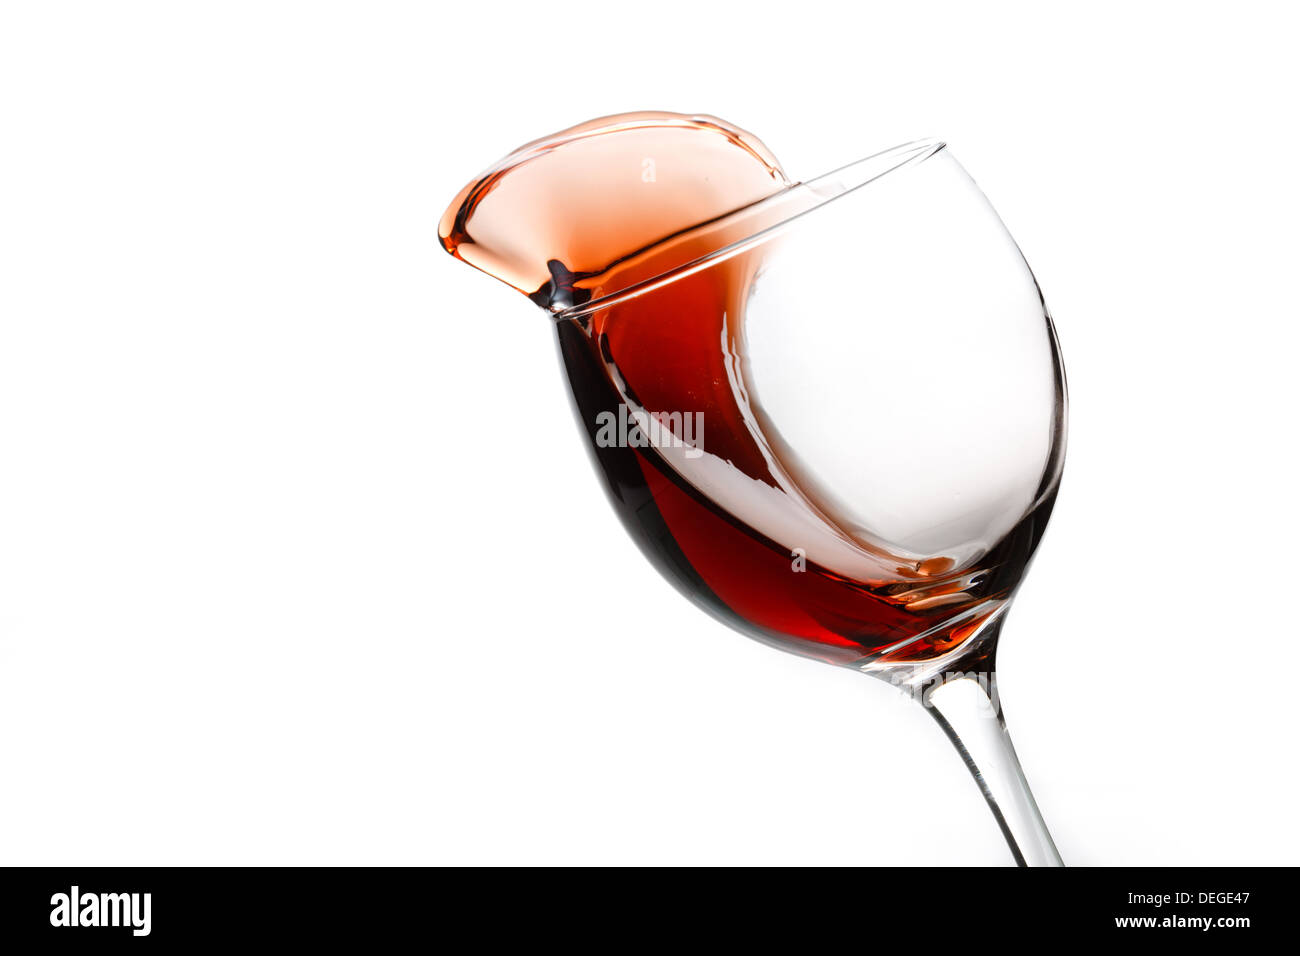 https://c8.alamy.com/comp/DEGE47/glass-of-red-wine-DEGE47.jpg